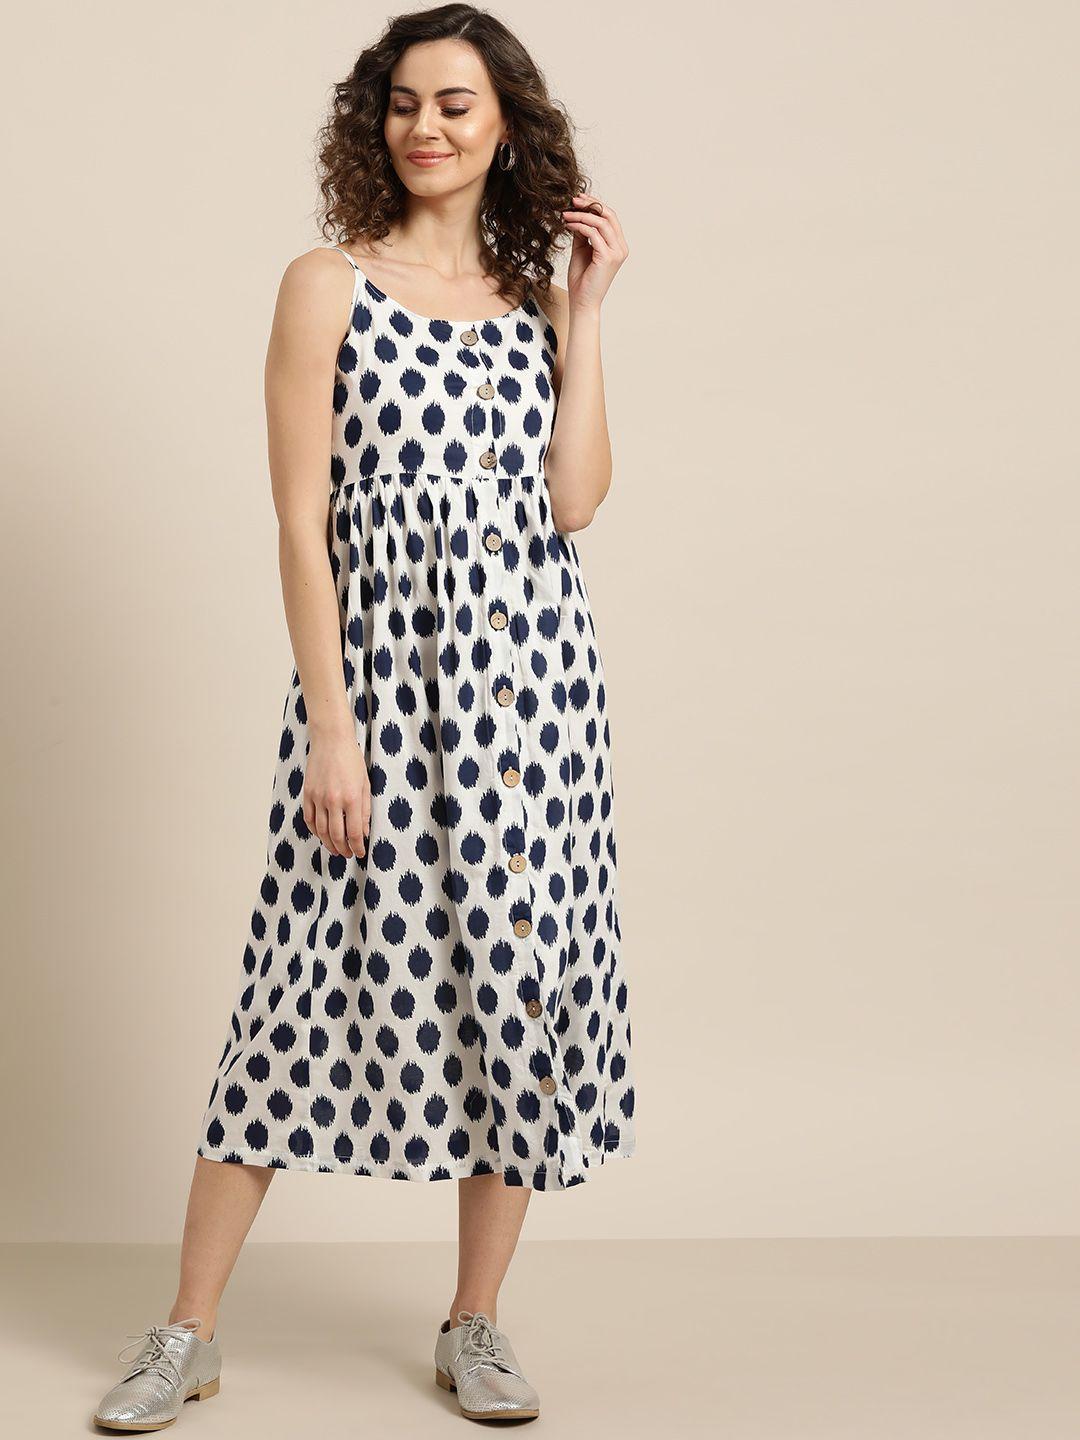 shae by sassafras women white & navy blue printed a-line dress